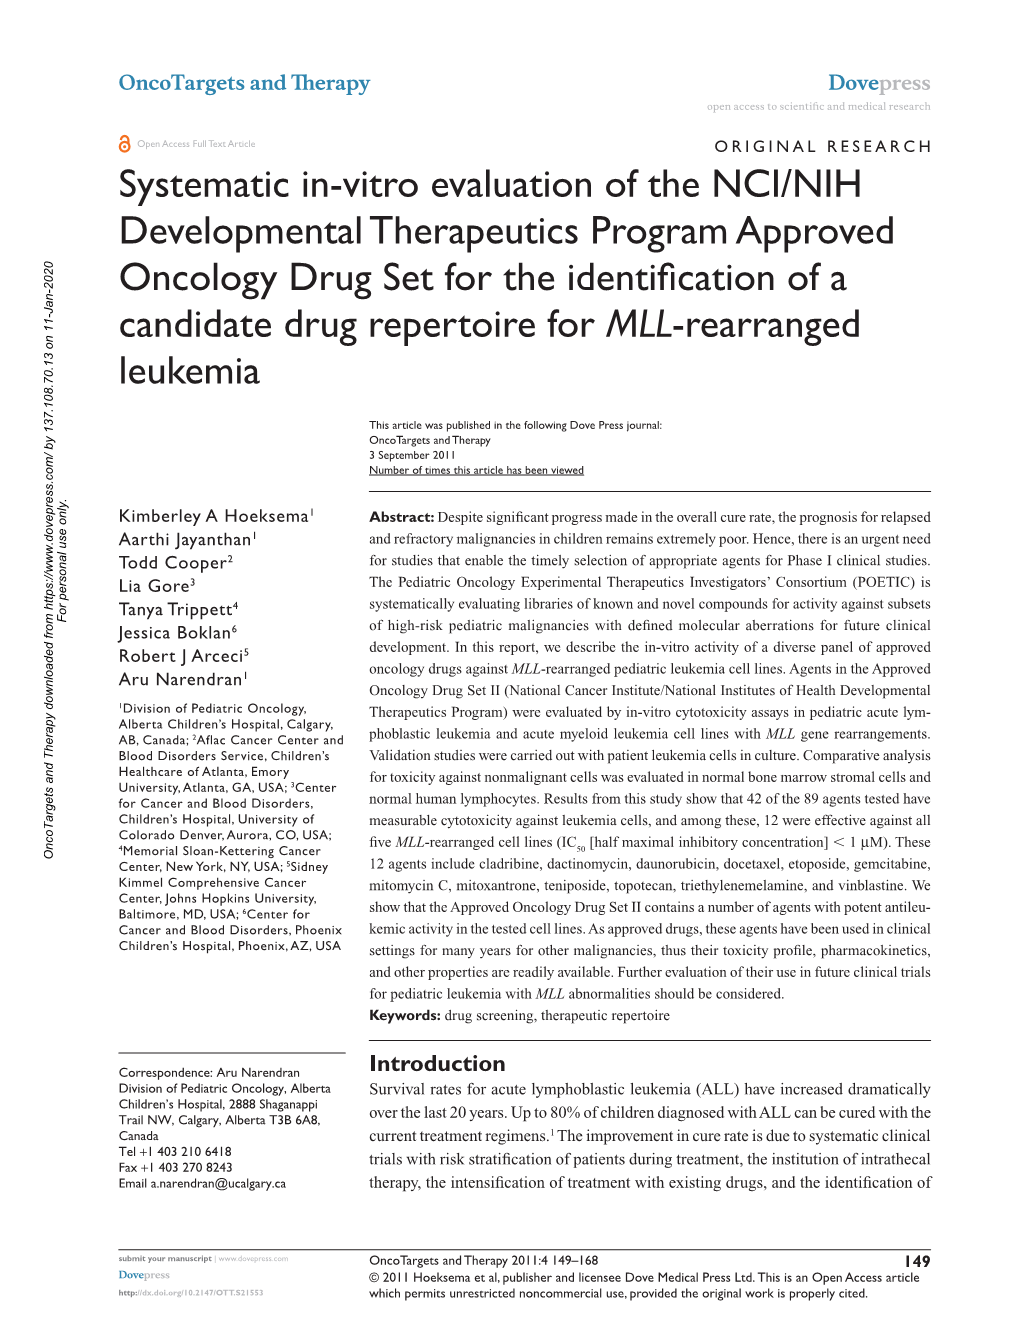 Systematic In-Vitro Evaluation of the Nci/Nih Developmental